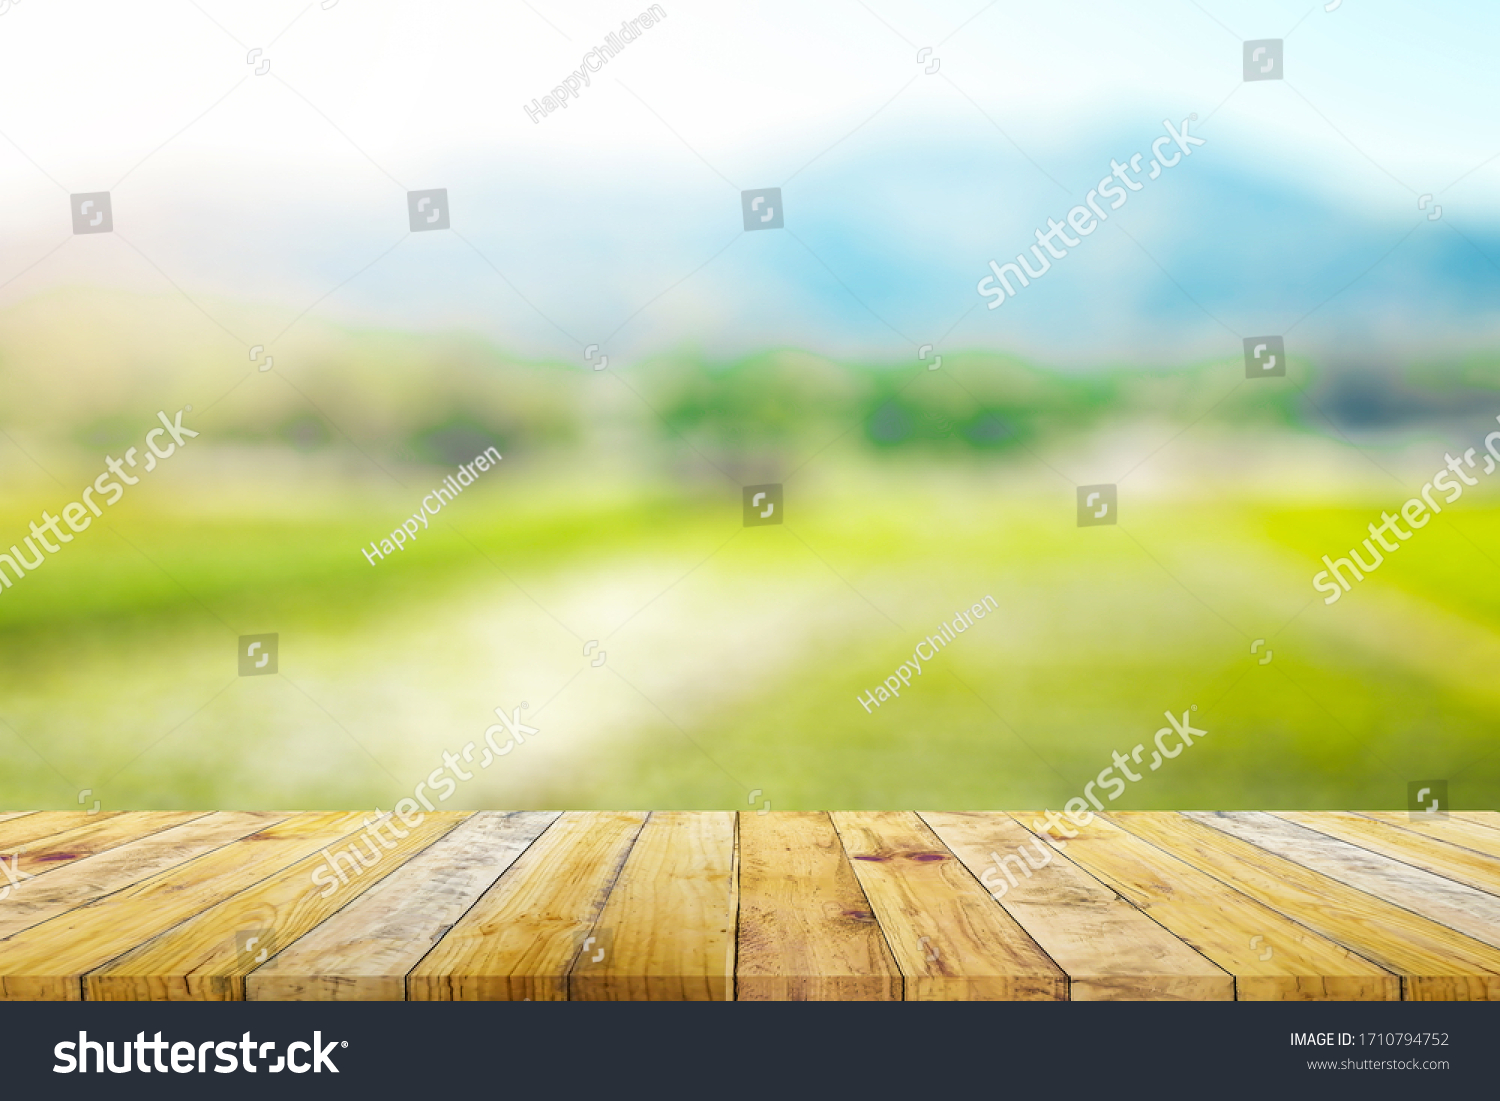 540,623 Farm background wood Images, Stock Photos & Vectors | Shutterstock